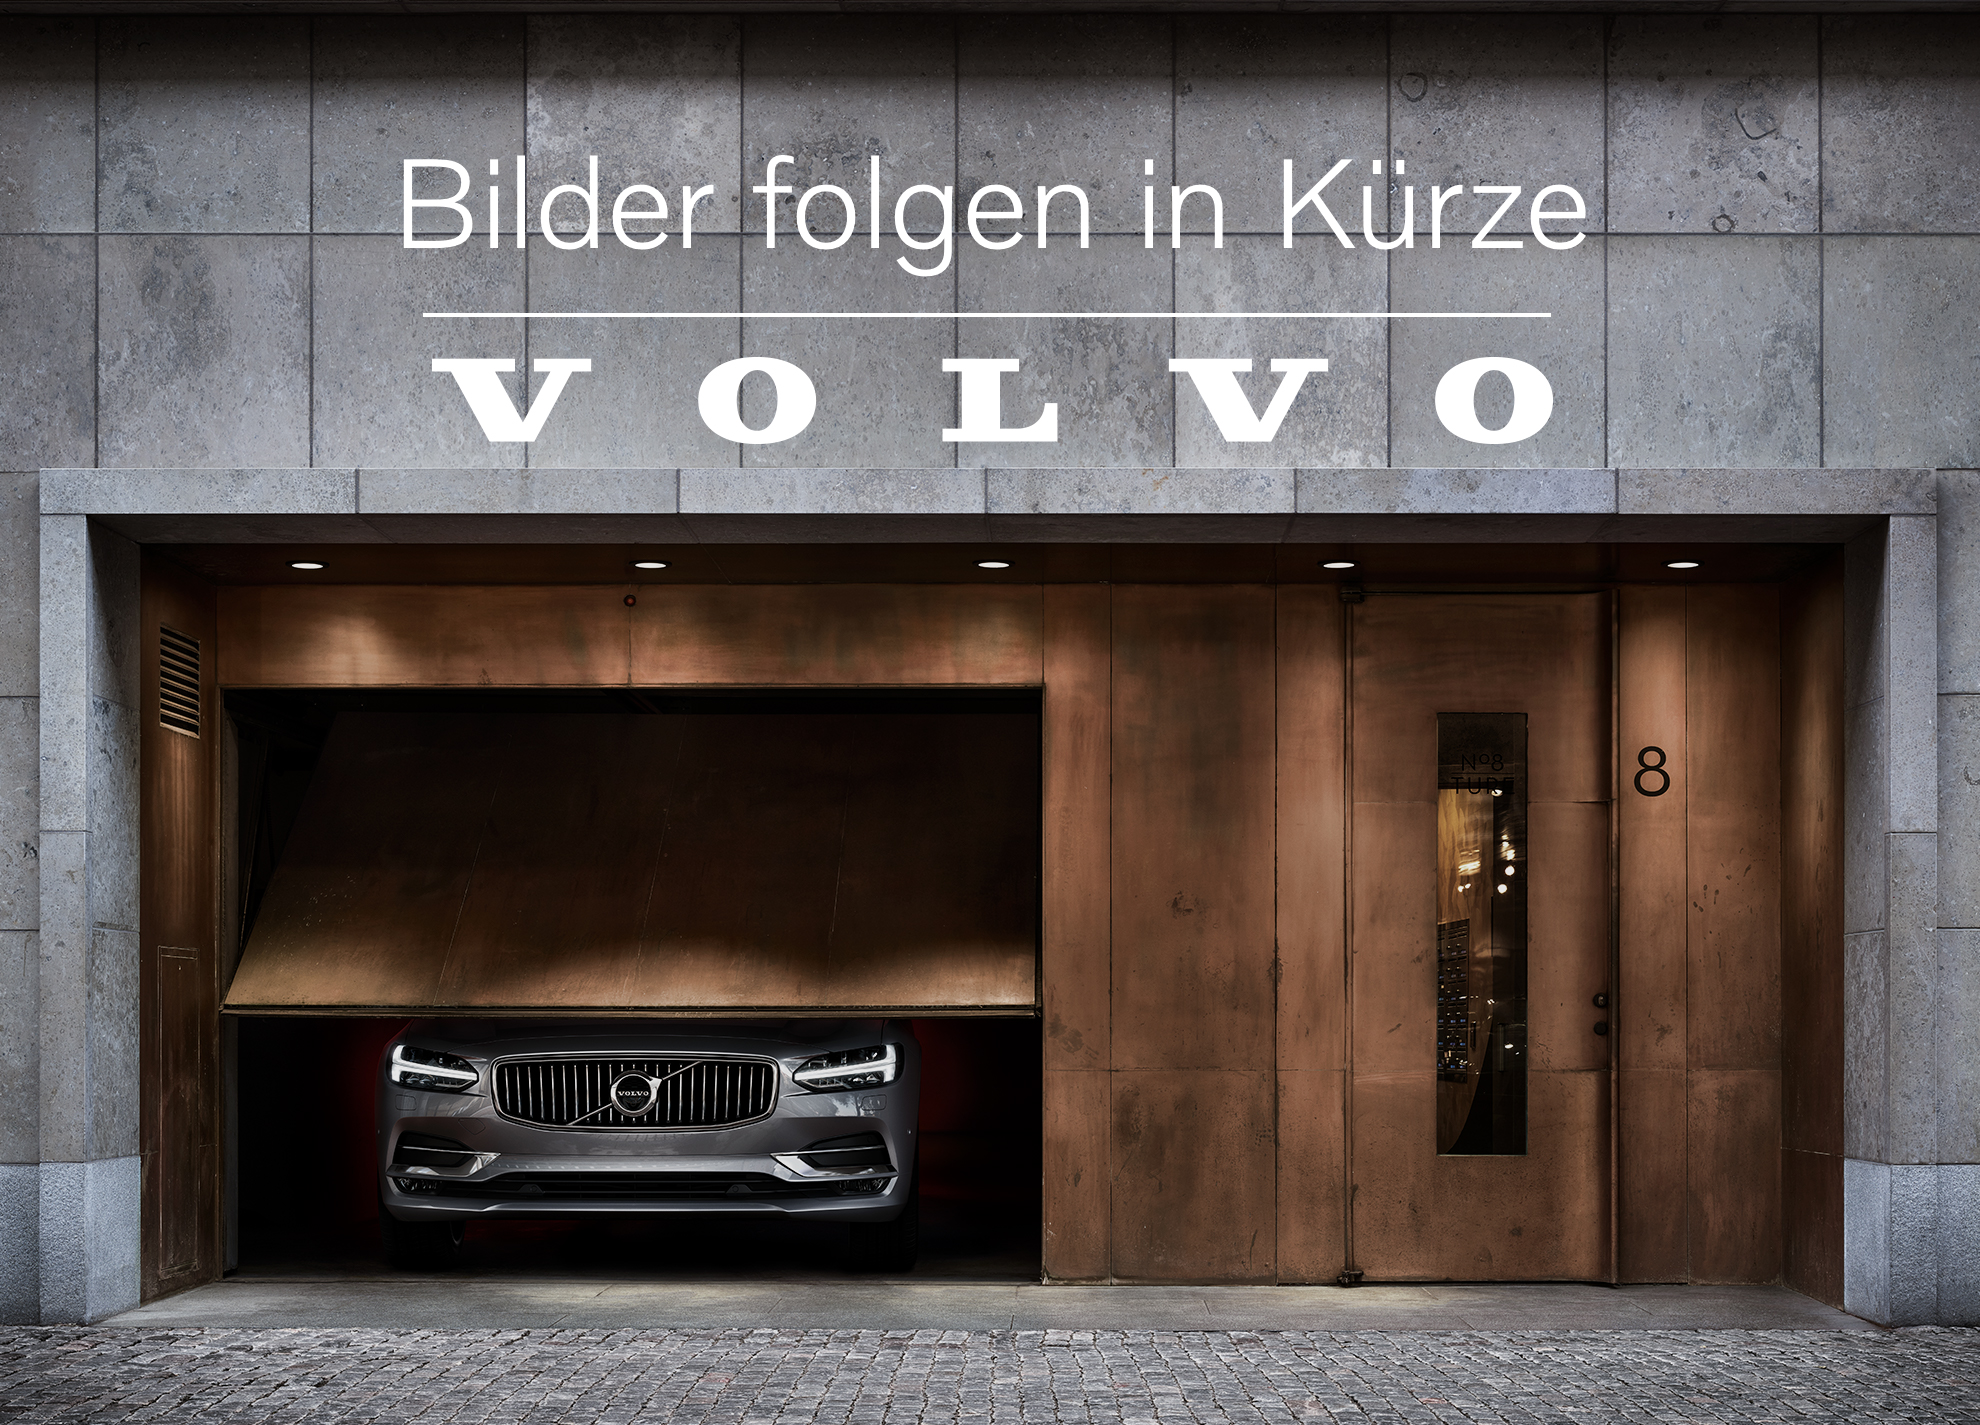 Volvo  D4 AWD Momentum